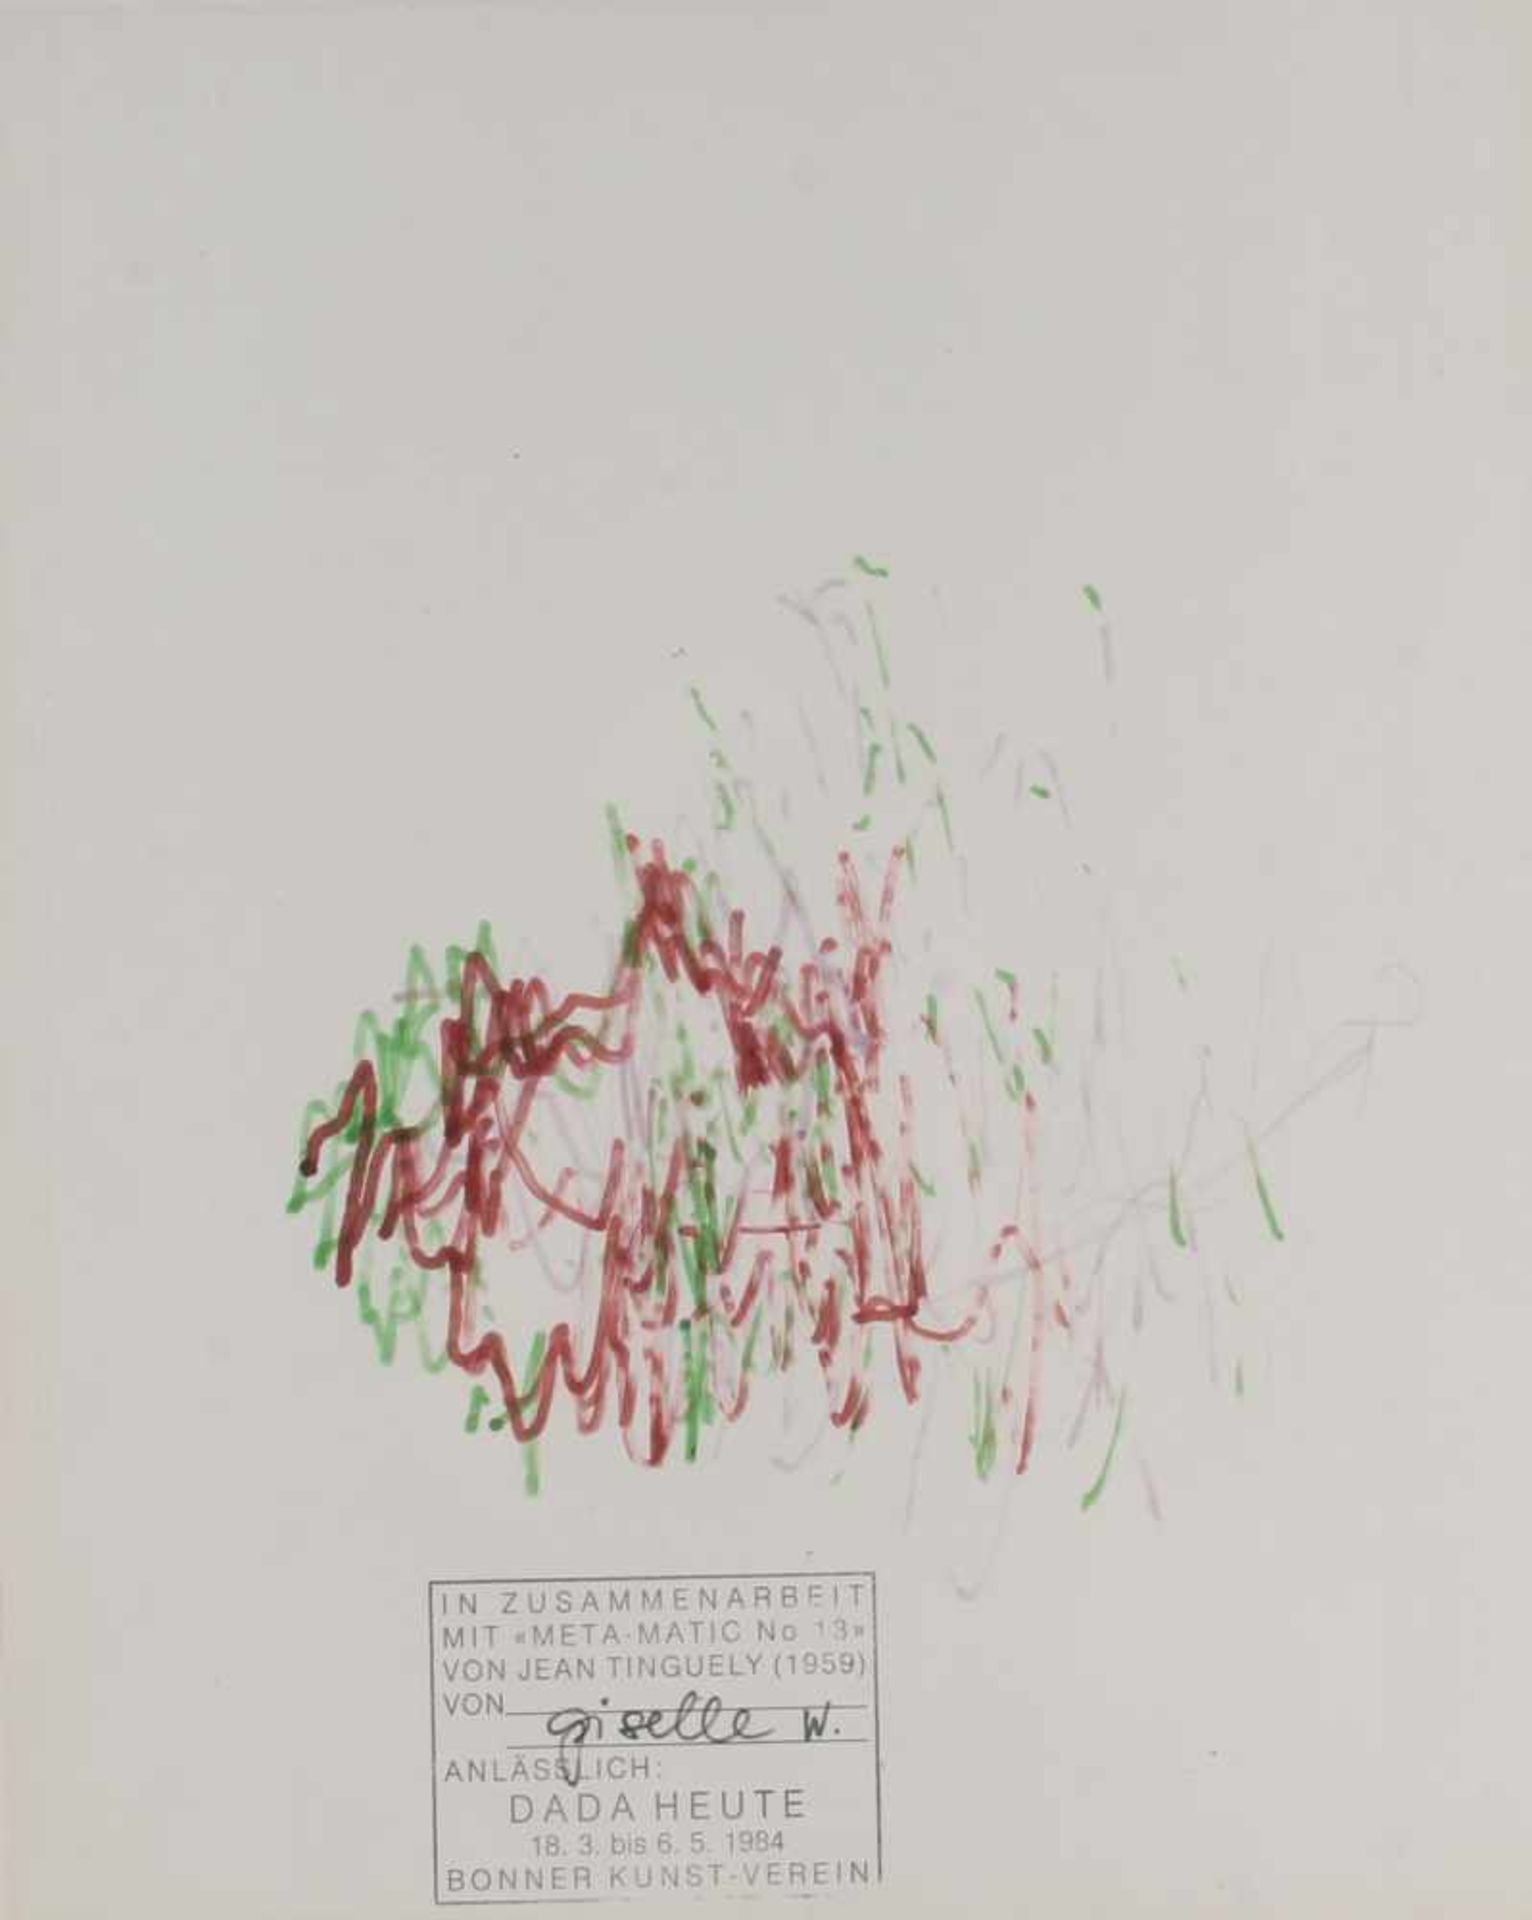 Jean TINGUELY (1925-1991) & Giselle W., Meta-Matic No. 13, Grafik, mit Stempel des Bonner